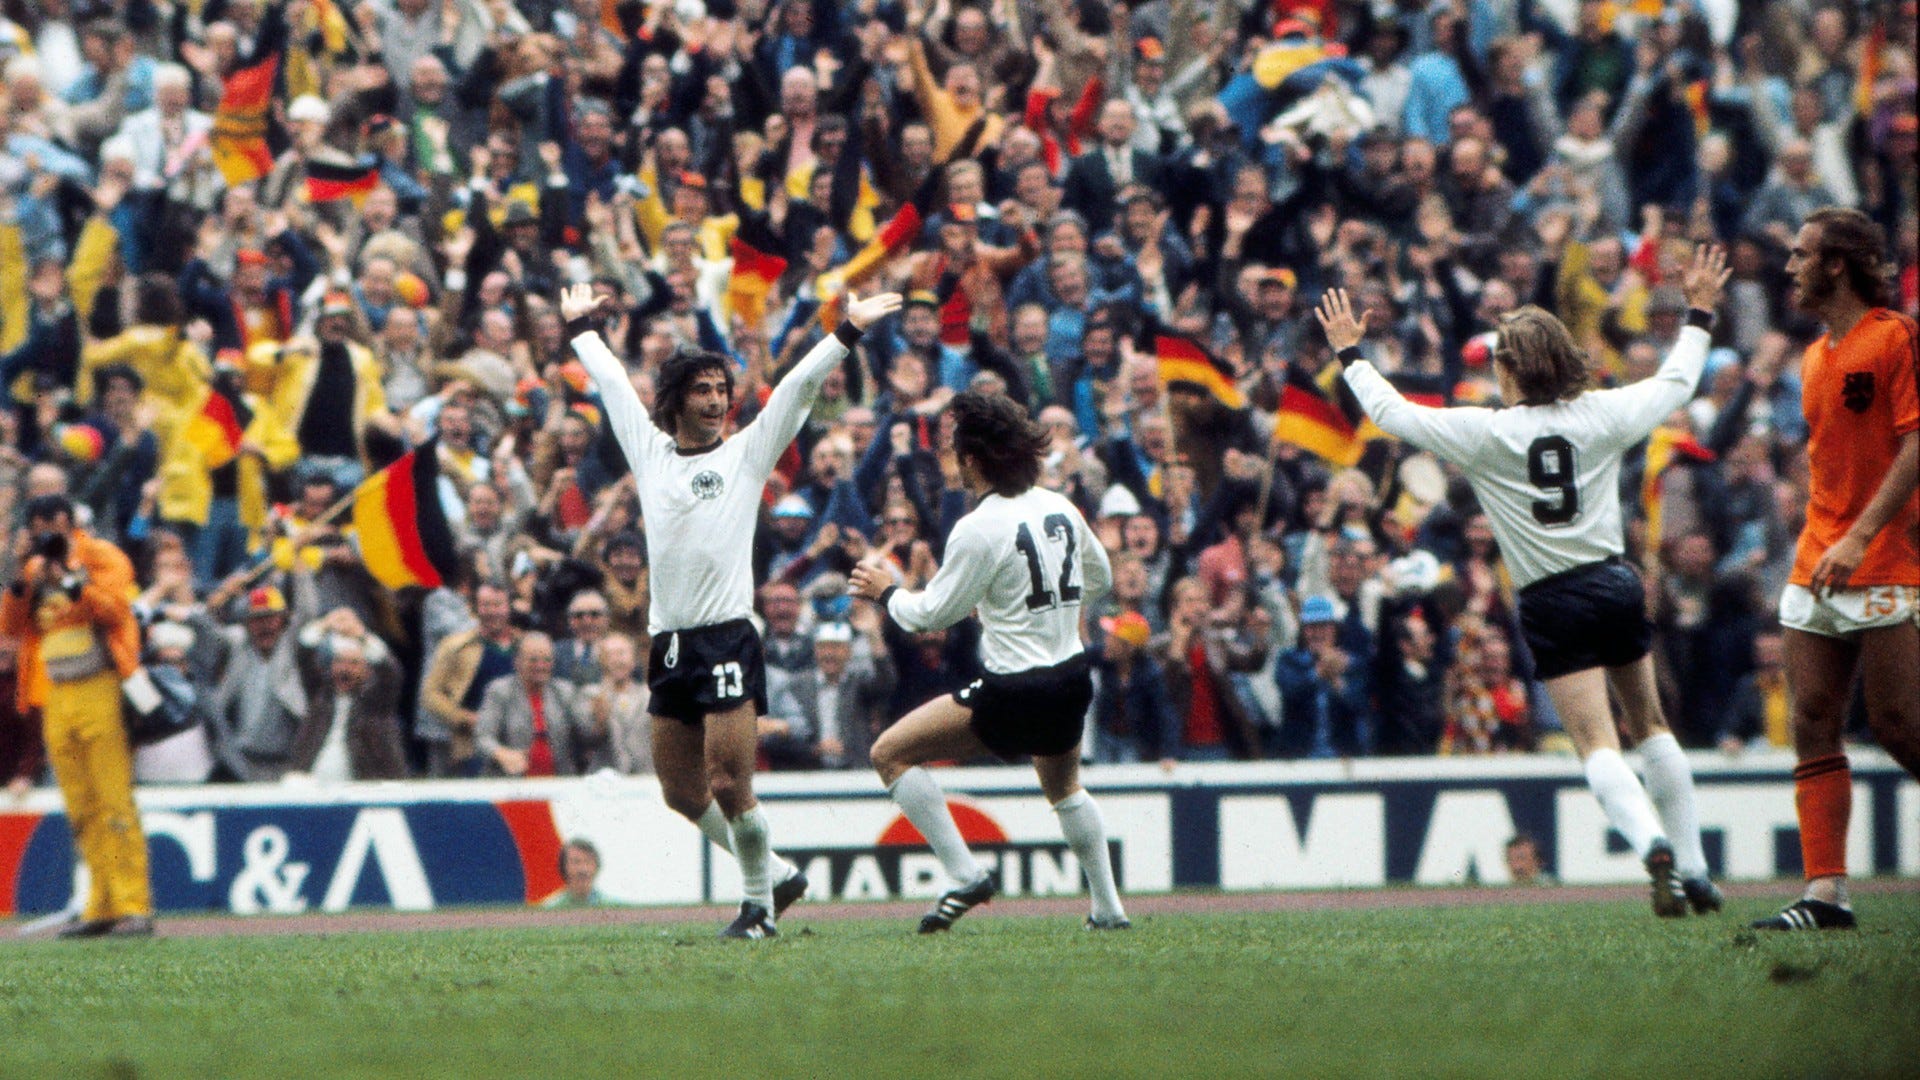 Wereldkampioen in Duitsland 1974: Tegen wie won het DFB-team de finale?